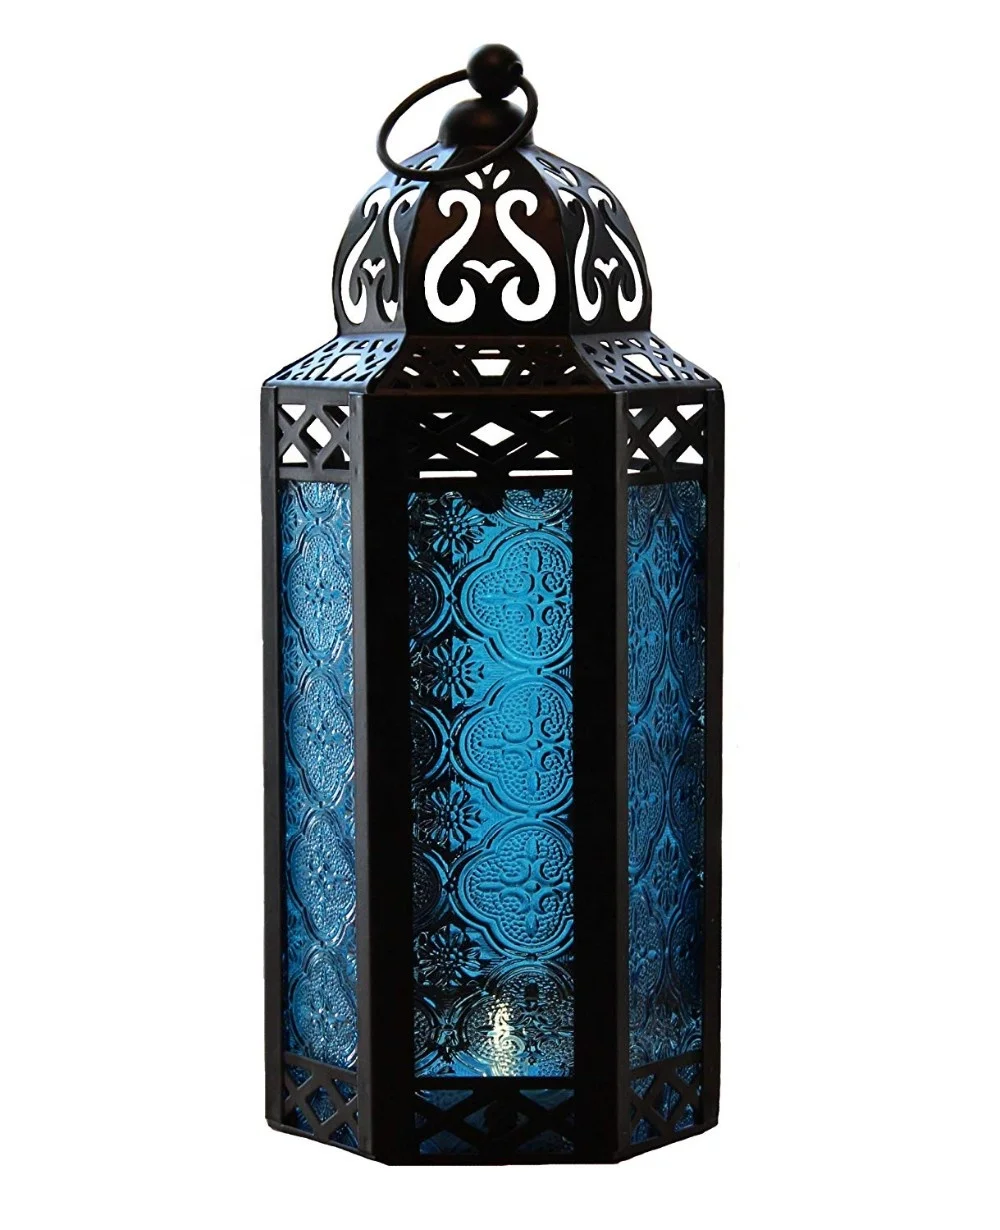 Metalen antieke kleurrijke glas marokkaanse opknoping lamp lantaarns hollow out tafel top kaars lantaarns voor decoratie